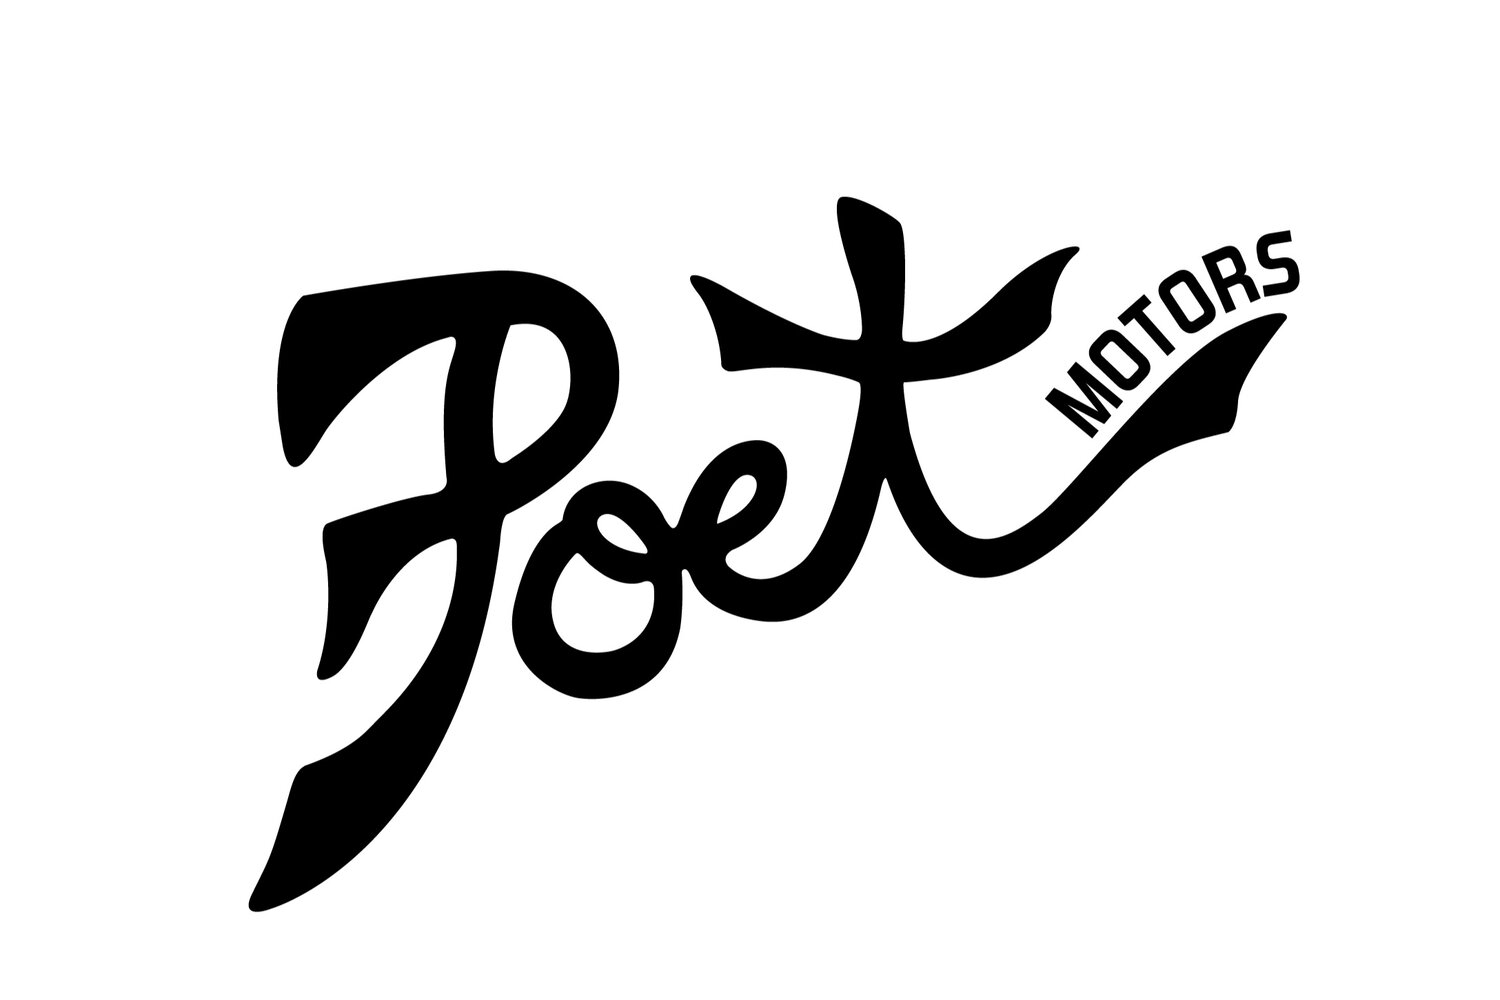 Poet Motors